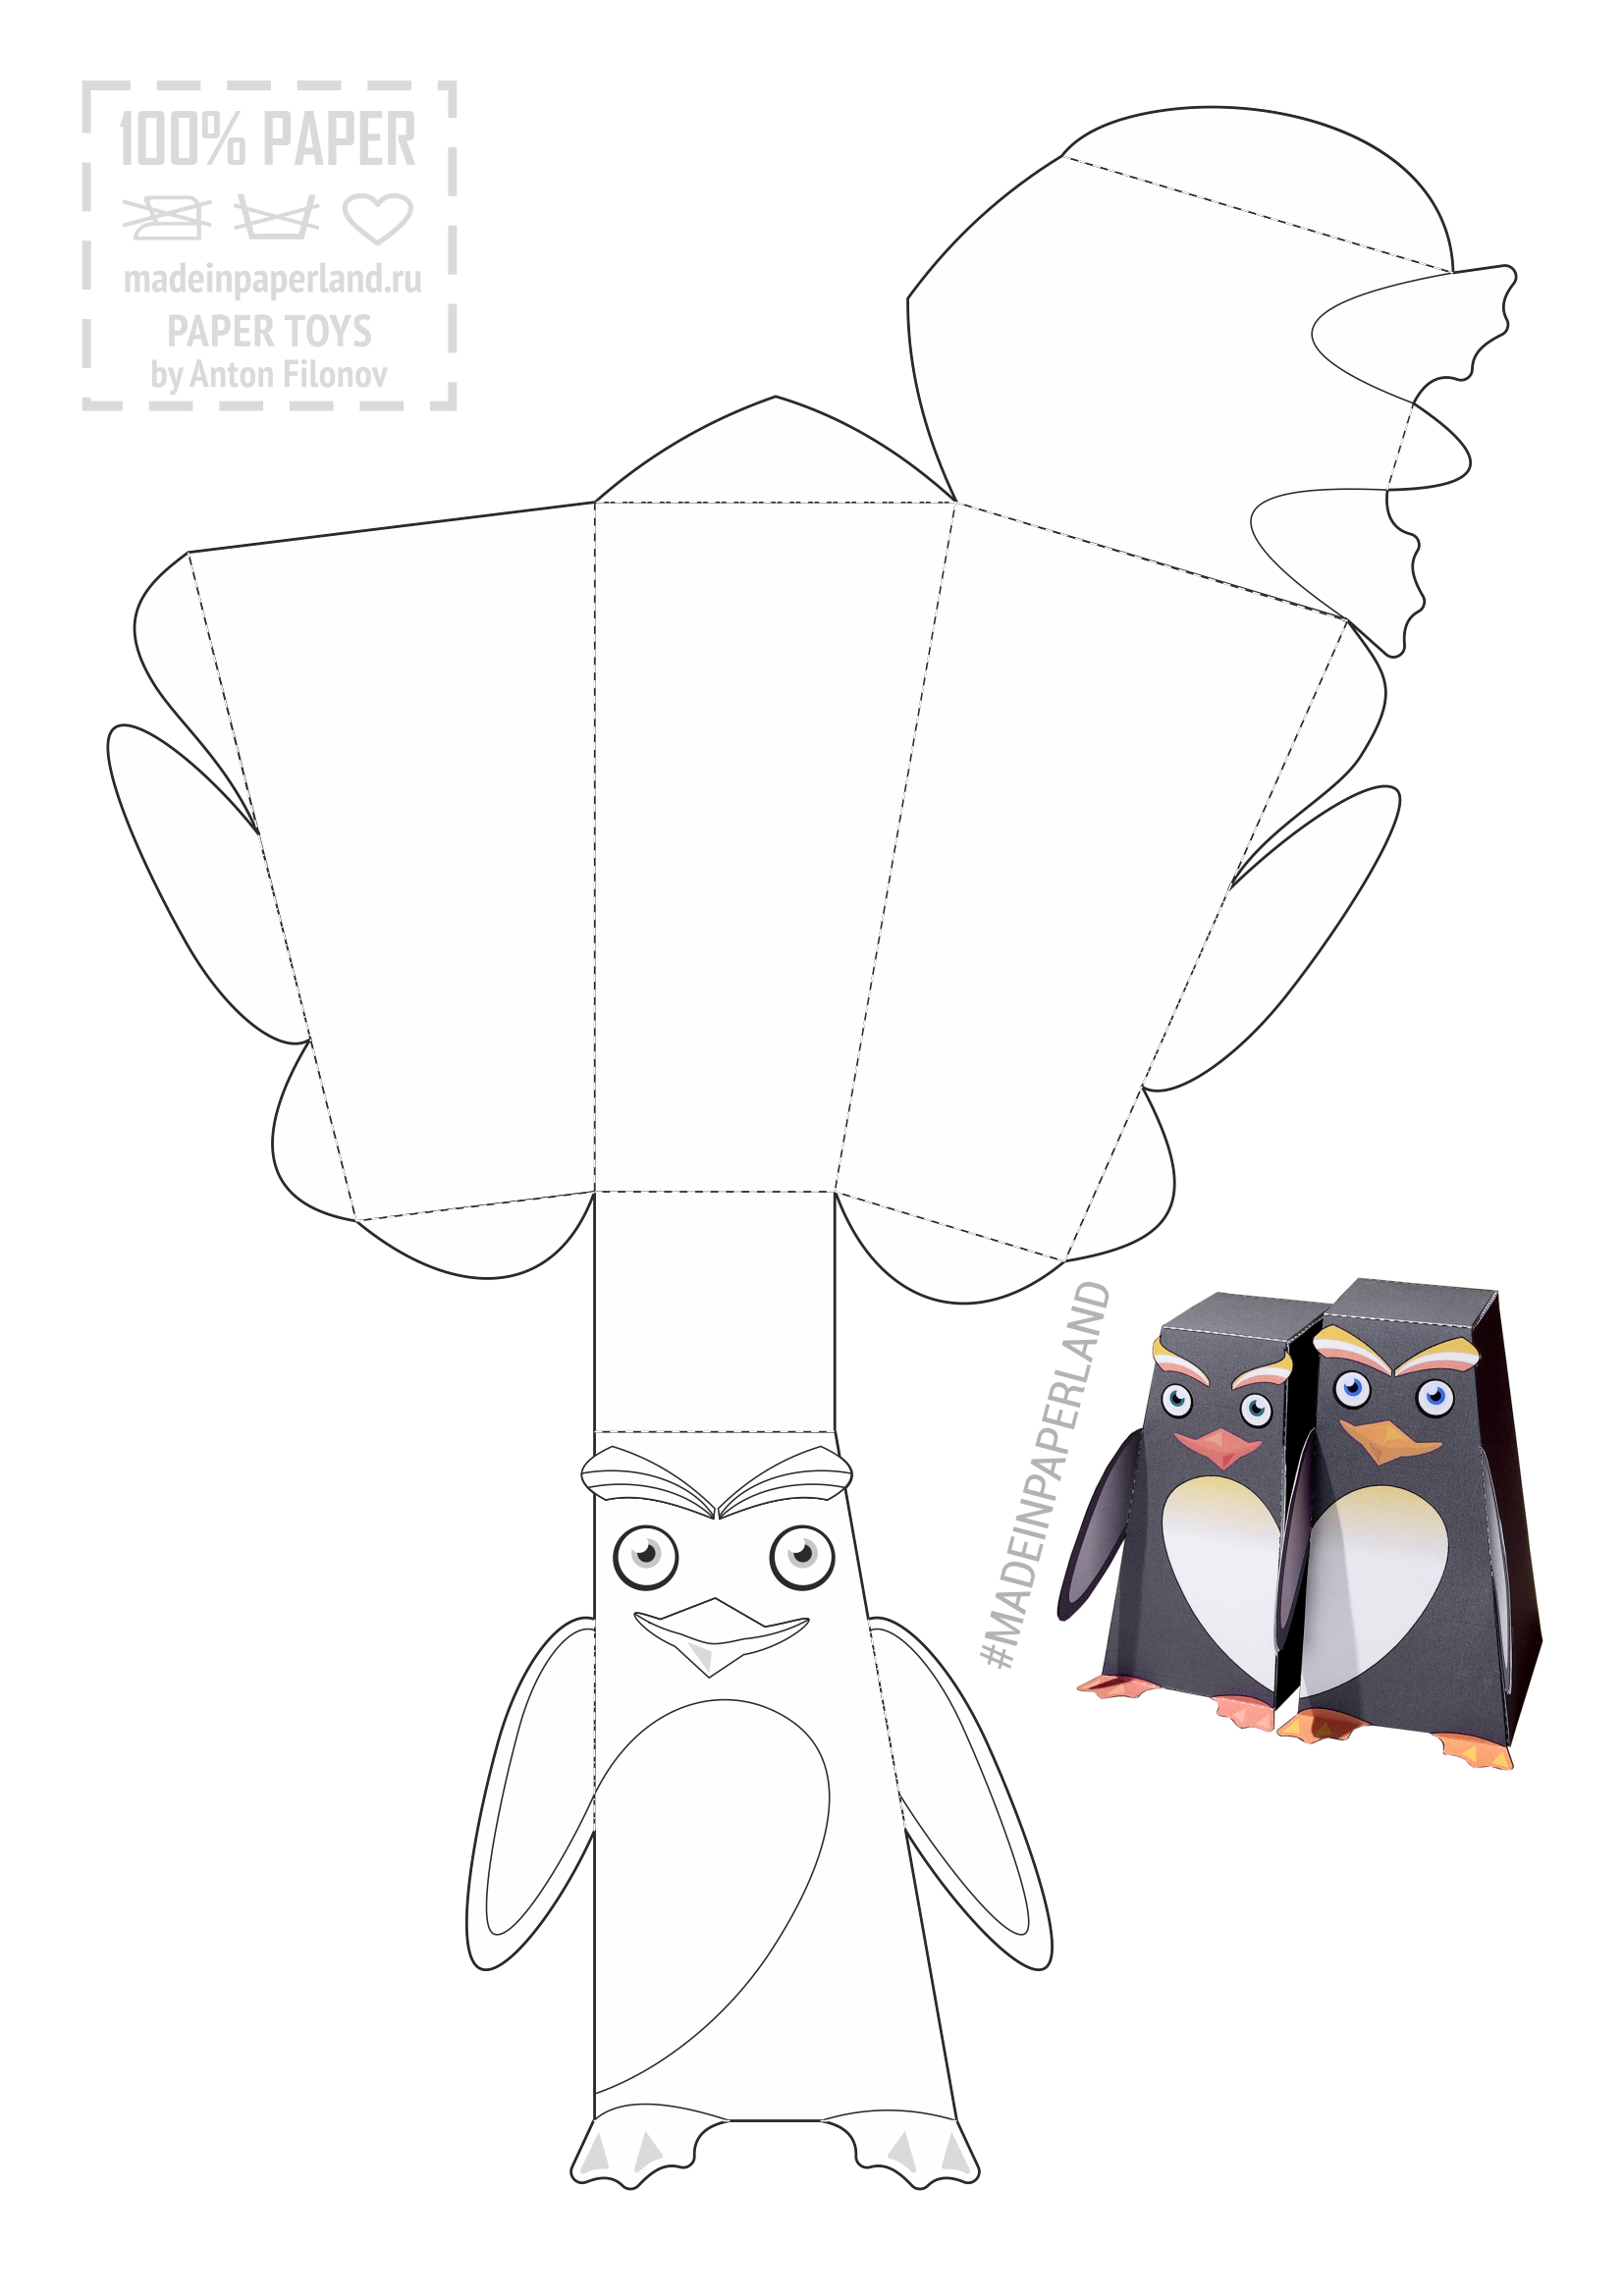 Penguins in love paper model - Free printable paper models by Anton Filonov